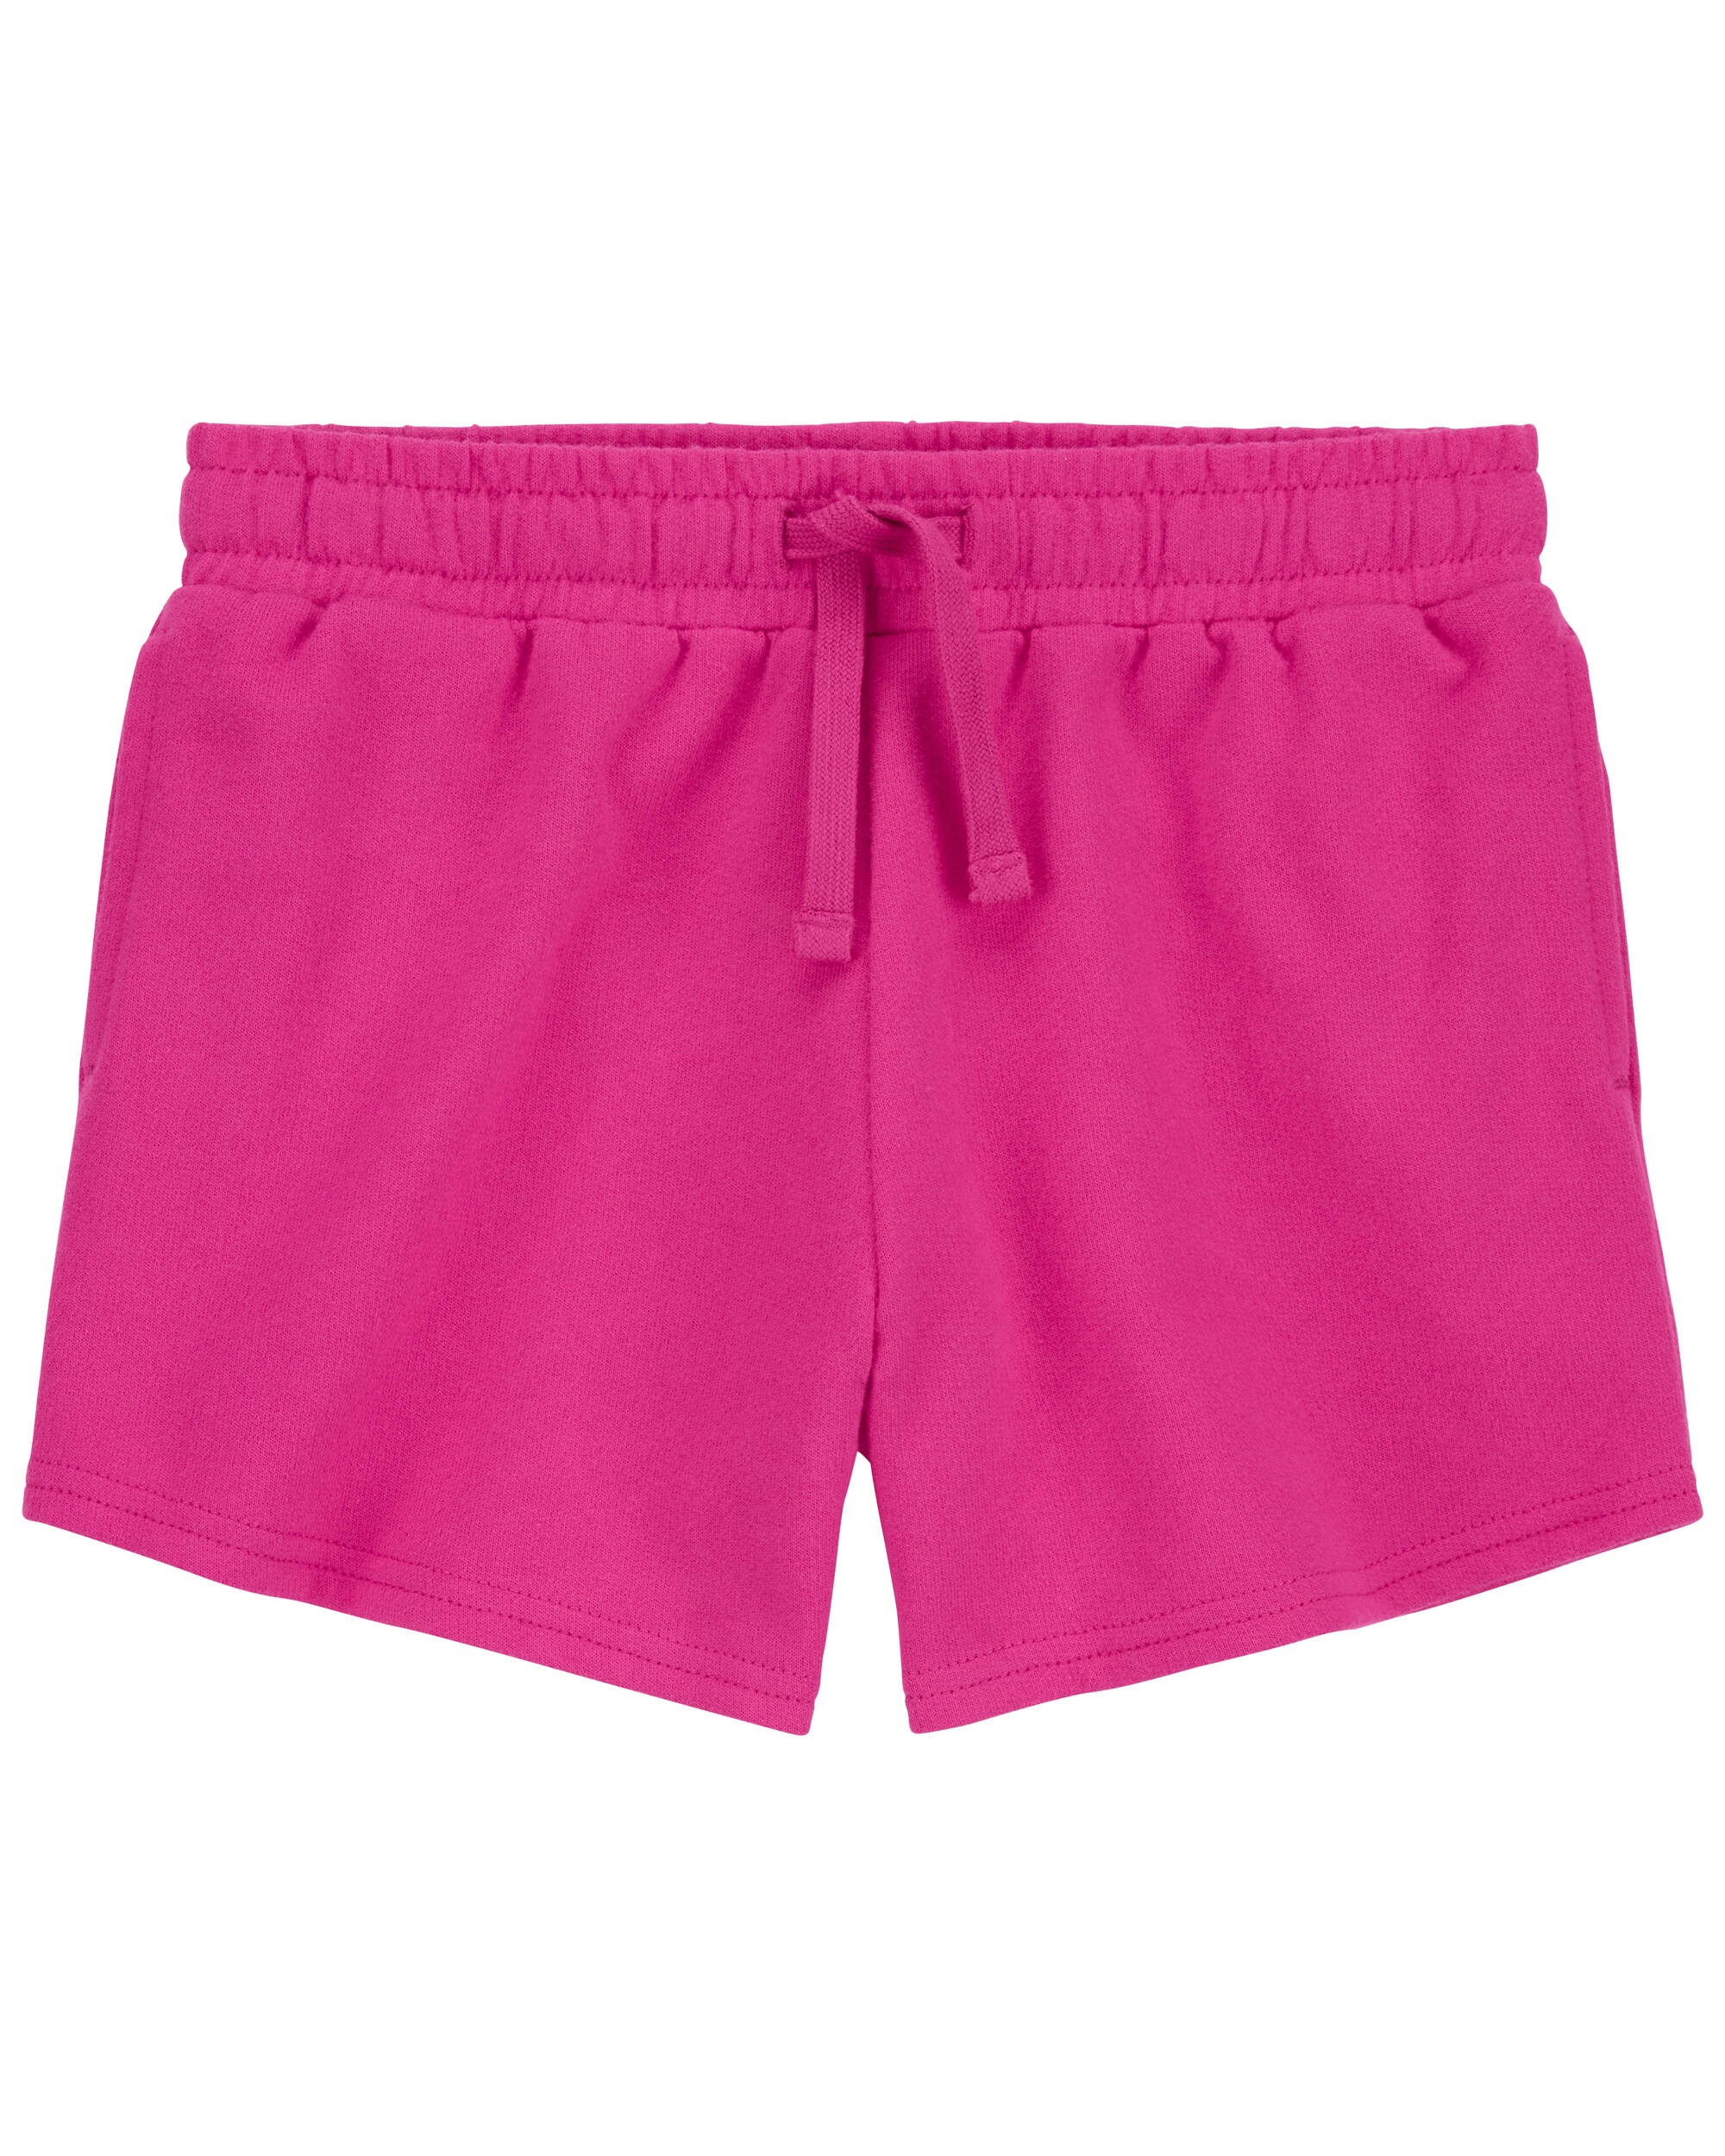 Kids' 3pk Seamless Boxer Shorts - art class™ Blue/Pink/Blush Pink S